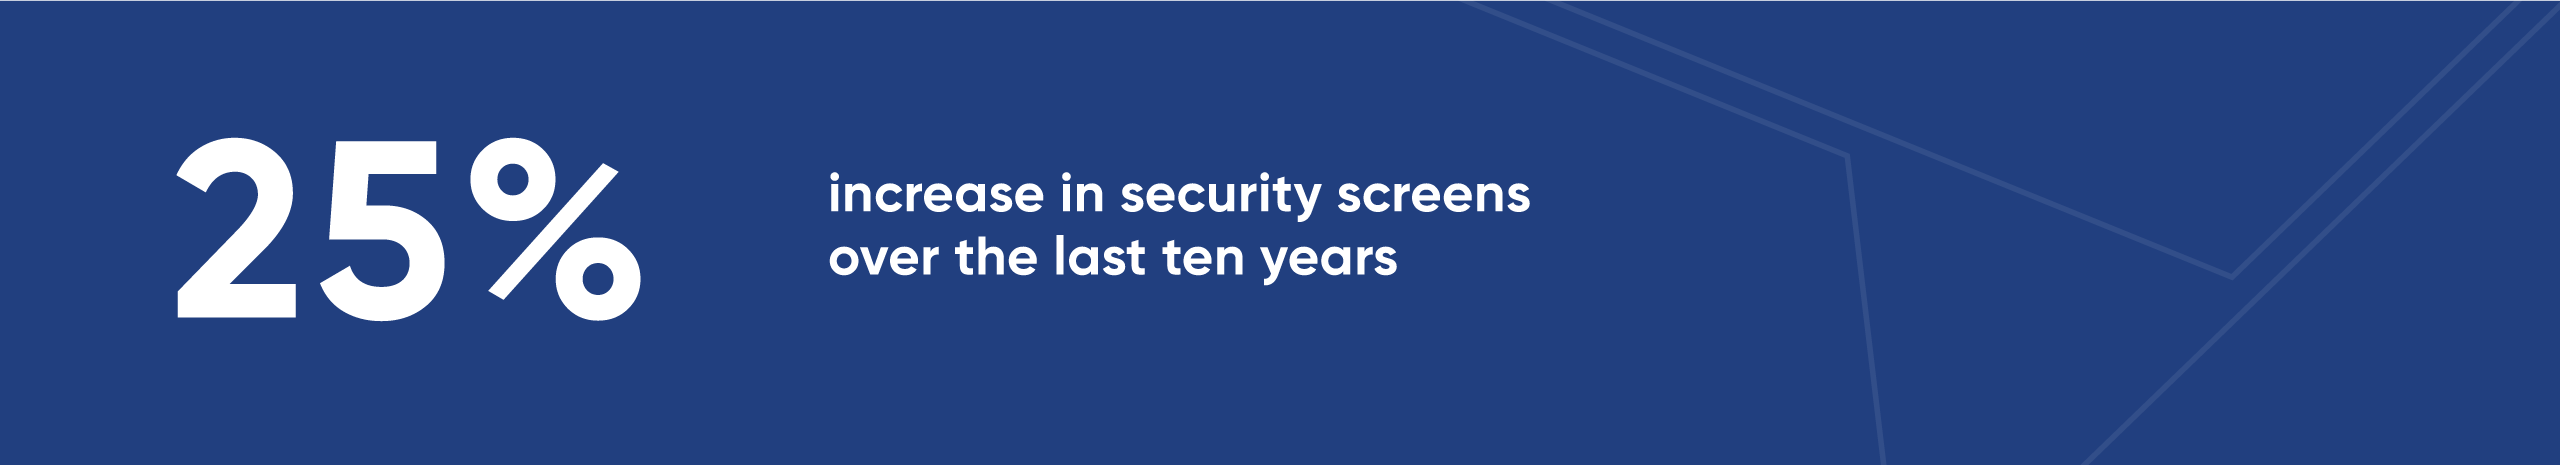 security-screen-usage